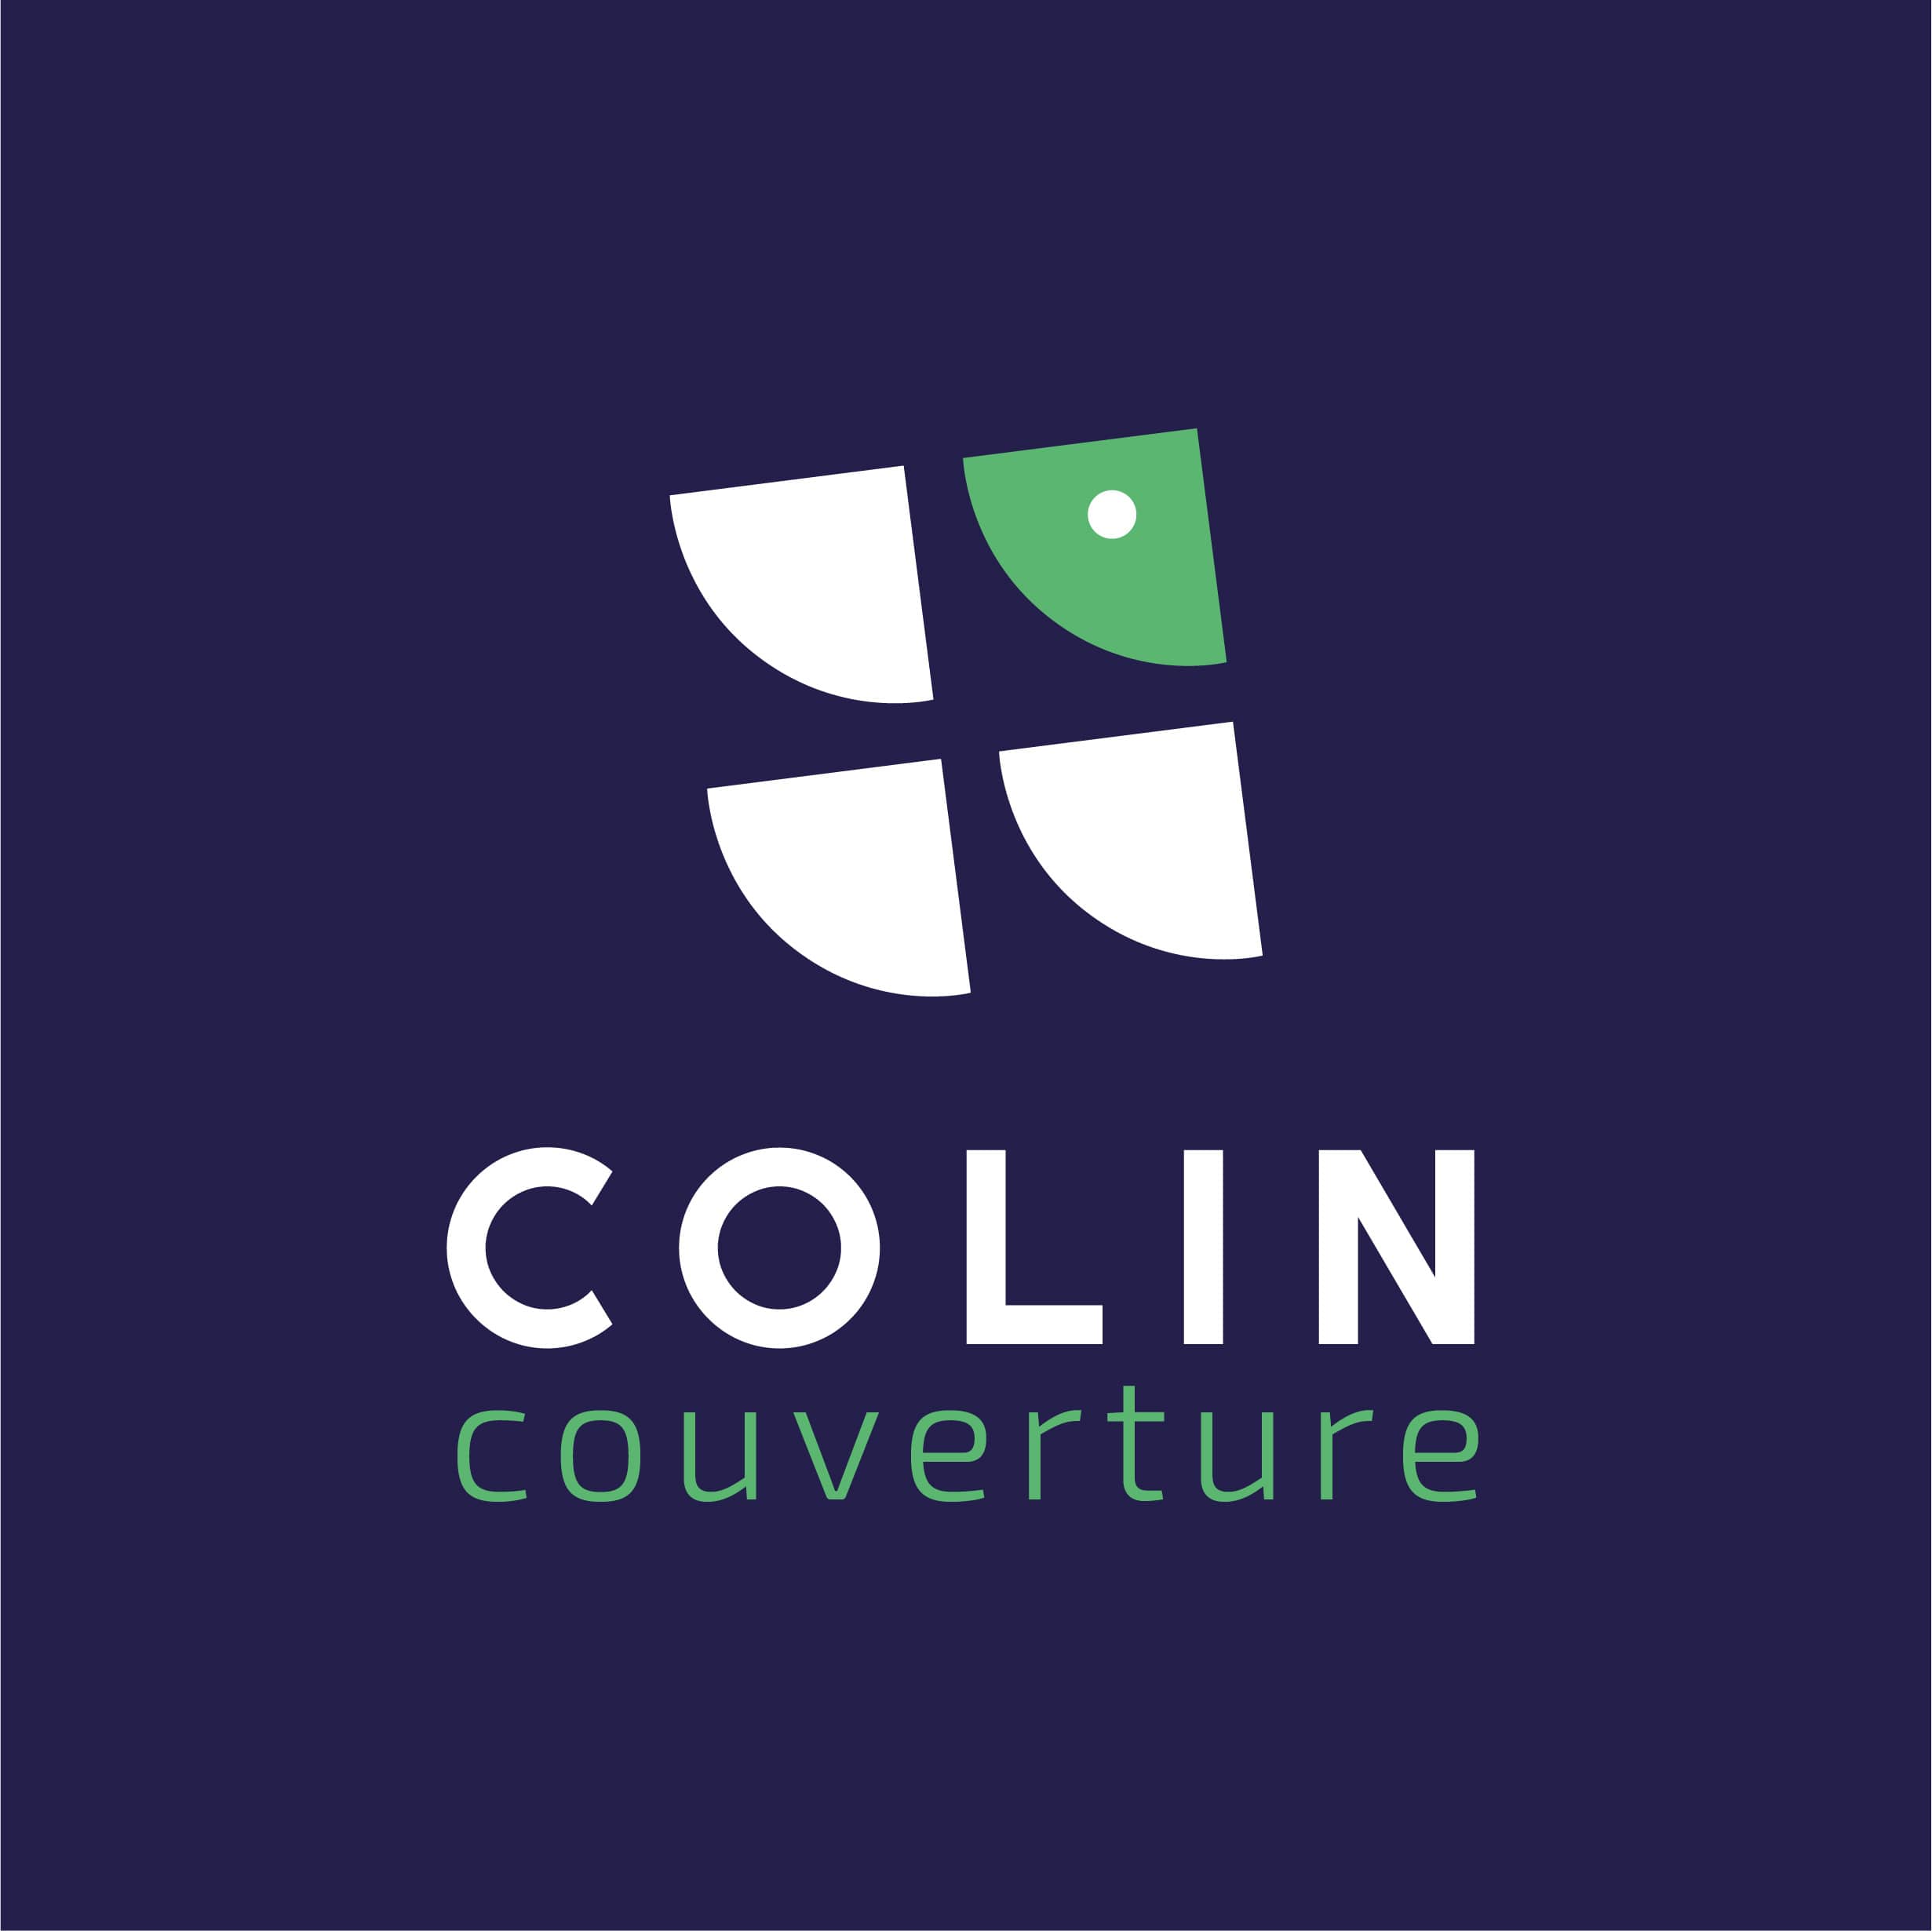 Colin Couverture logo